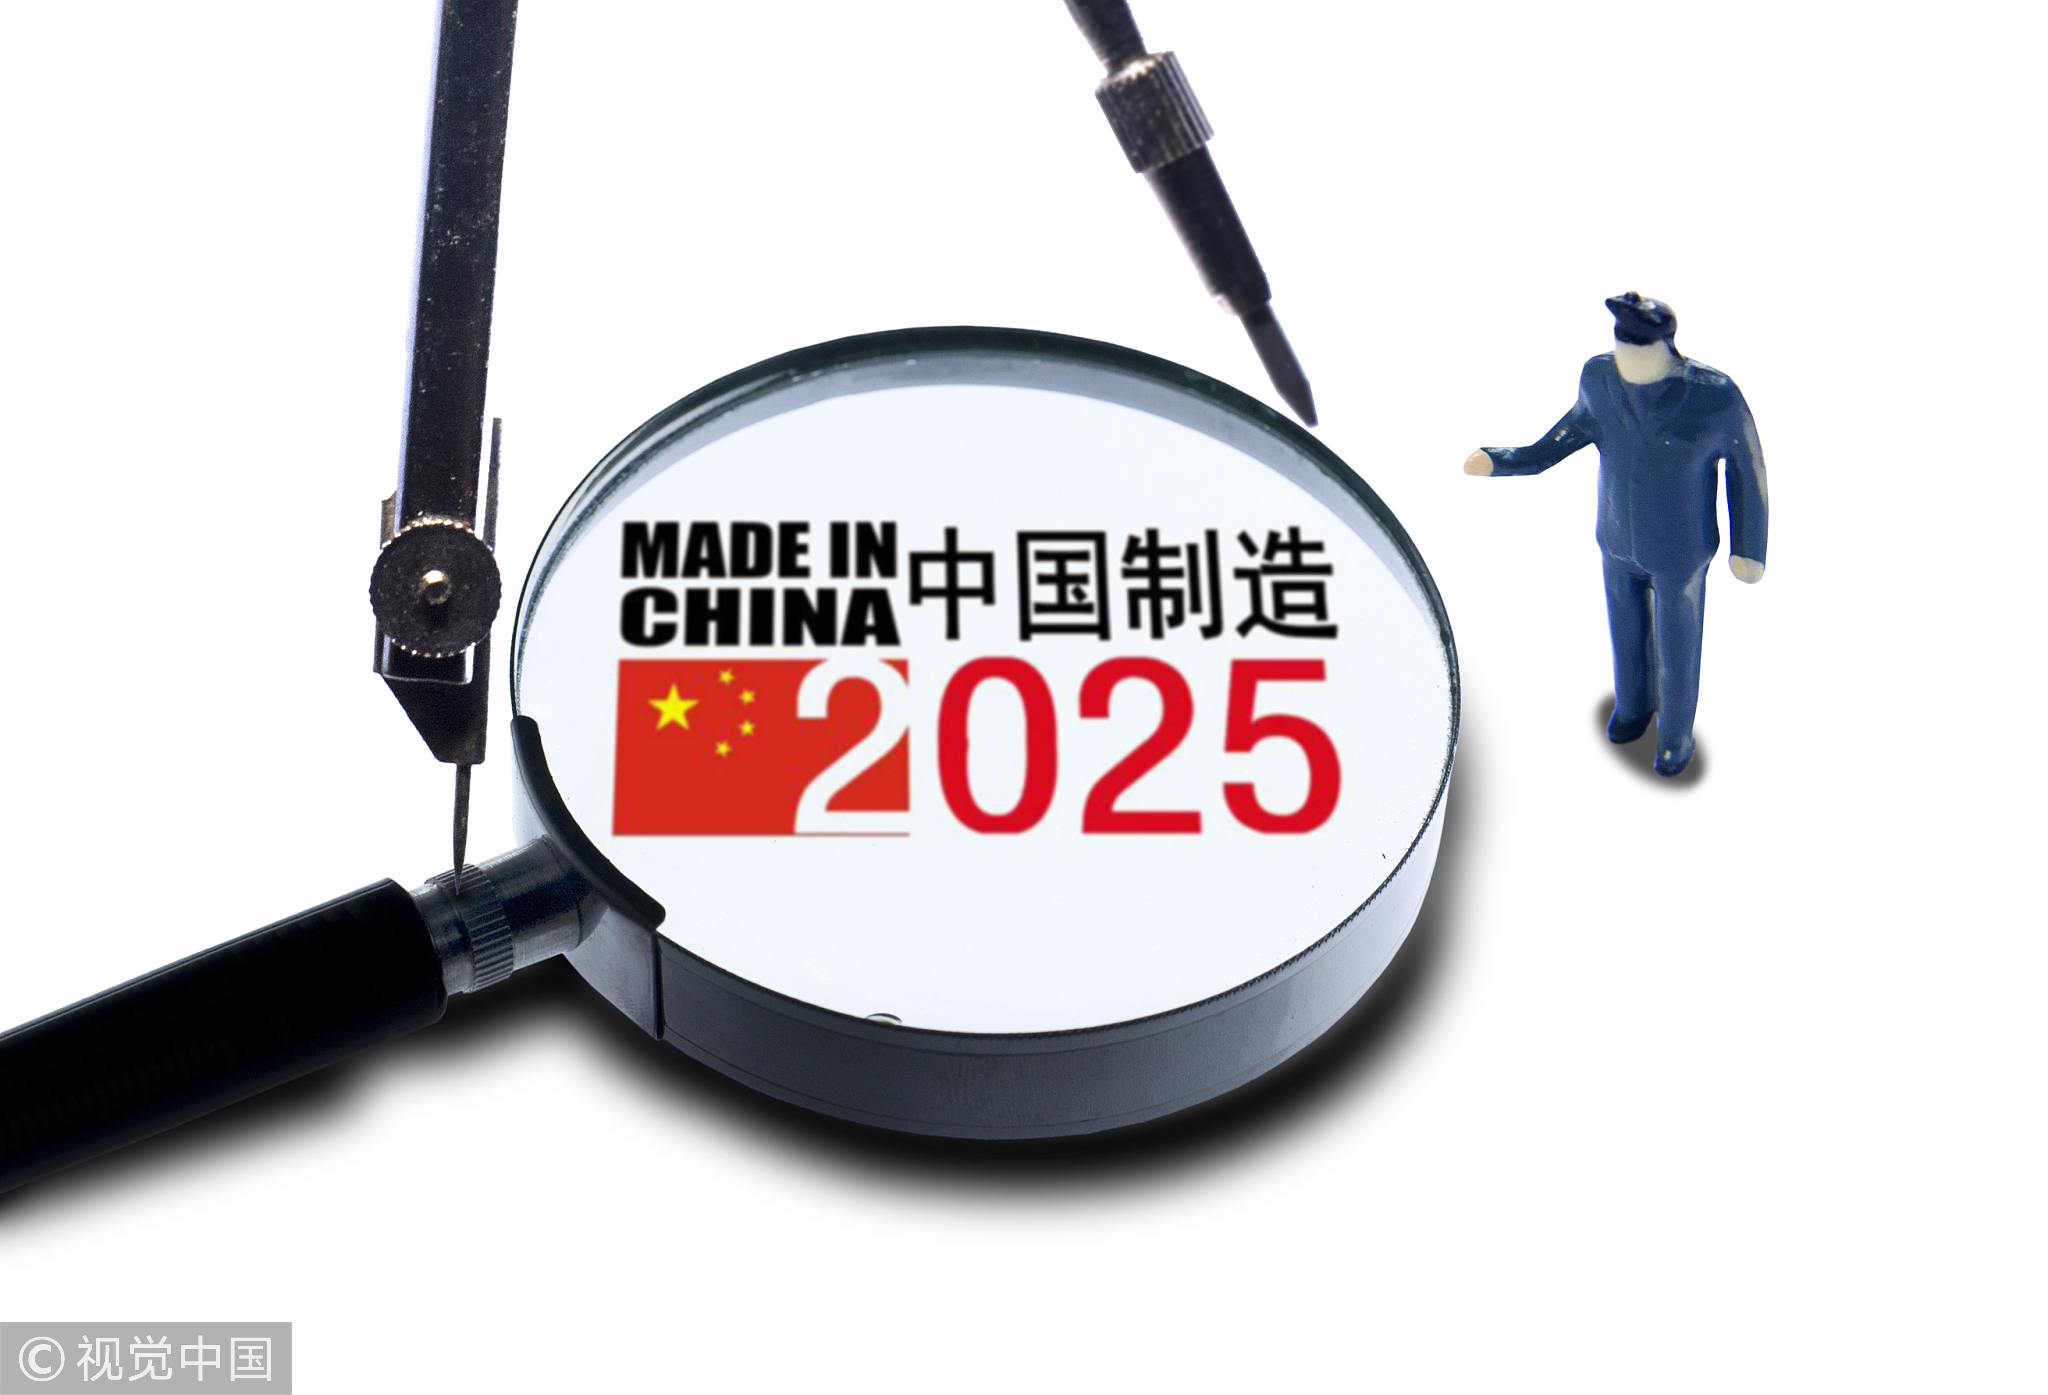 2025. Made in China 2025. Китай программа made in China 2025. «Made in China 2025» industry 4.0. Made in China 2025 Key sectors.